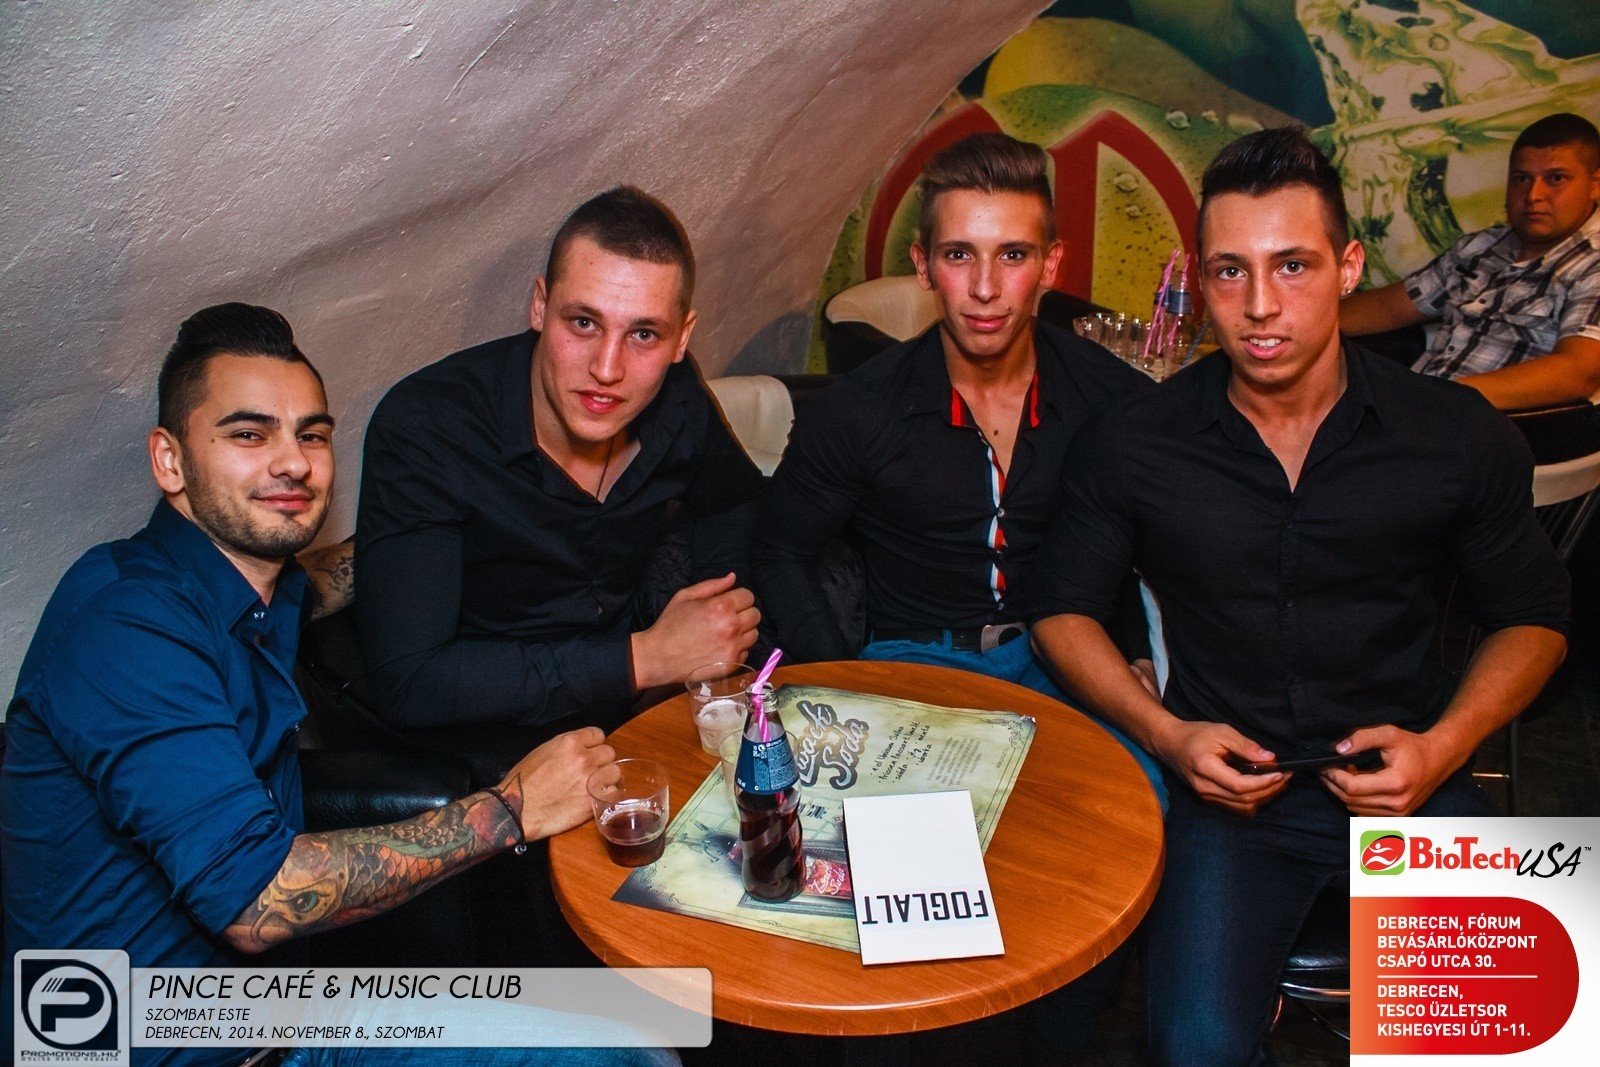 DEBRECEN, PINCE CAFÉ & MUSIC CLUB - 2014. NOVEMBER 8., SZOMBAT